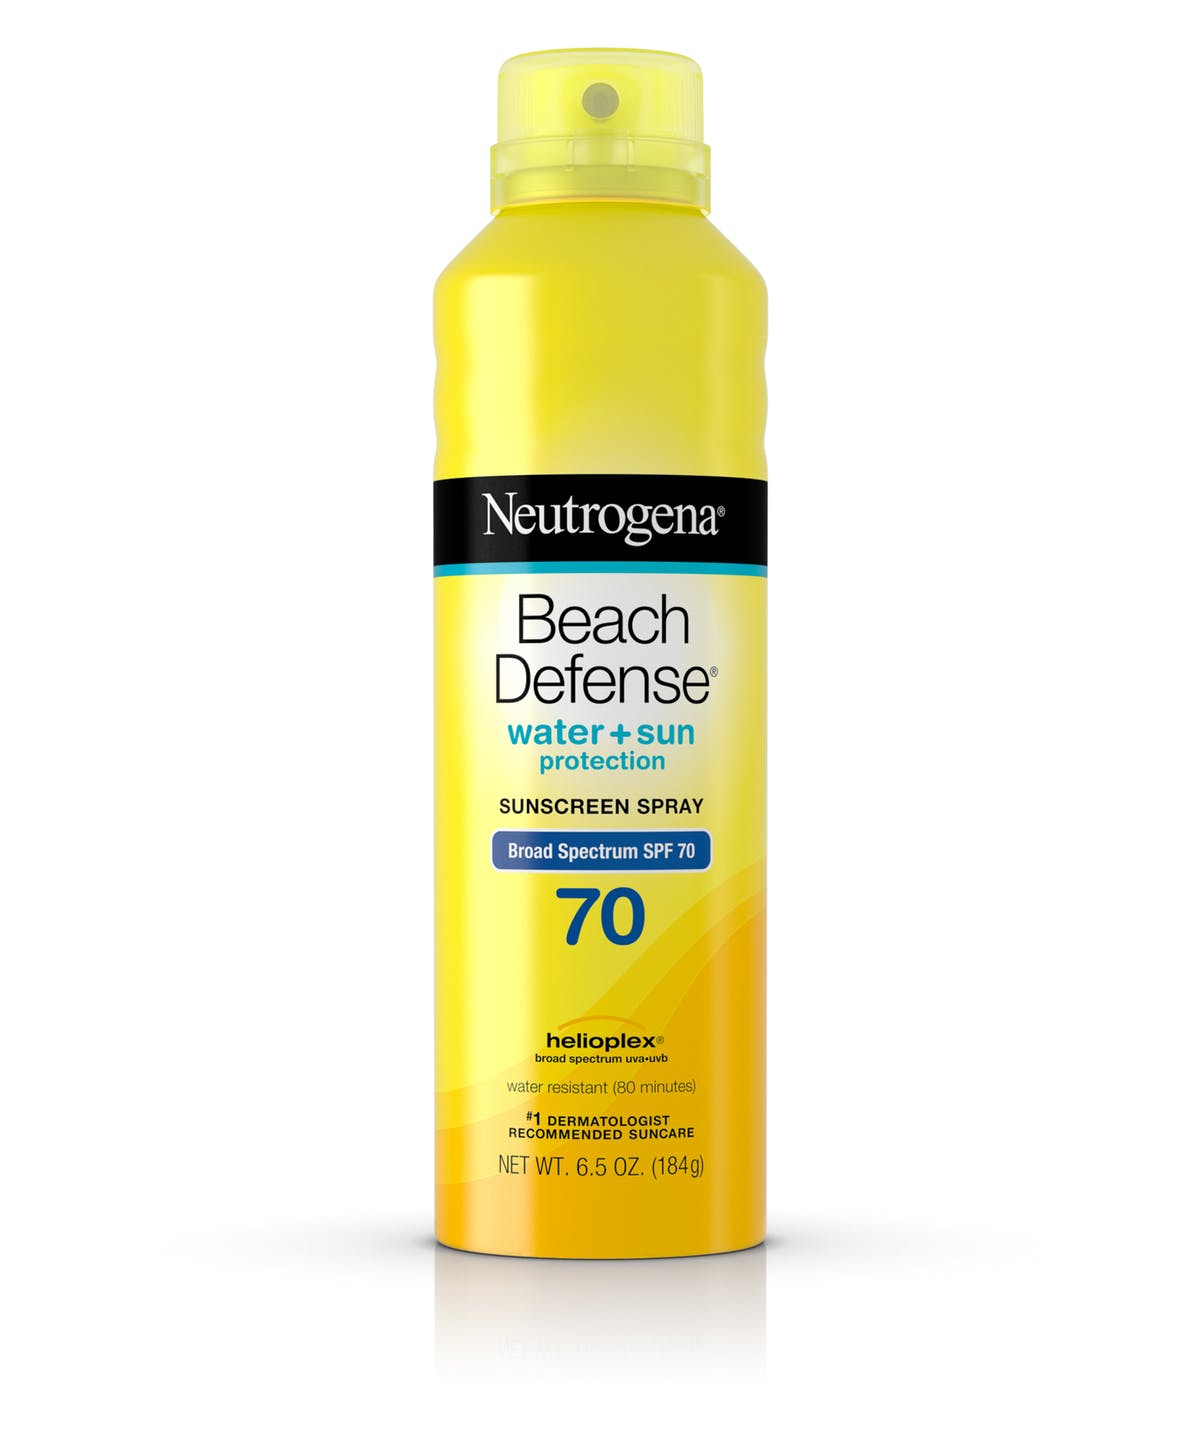 Neutrogena Beach Defense® Water + Sun Protection Sunscreen Spray Broad Spectrum SPF 70 Image